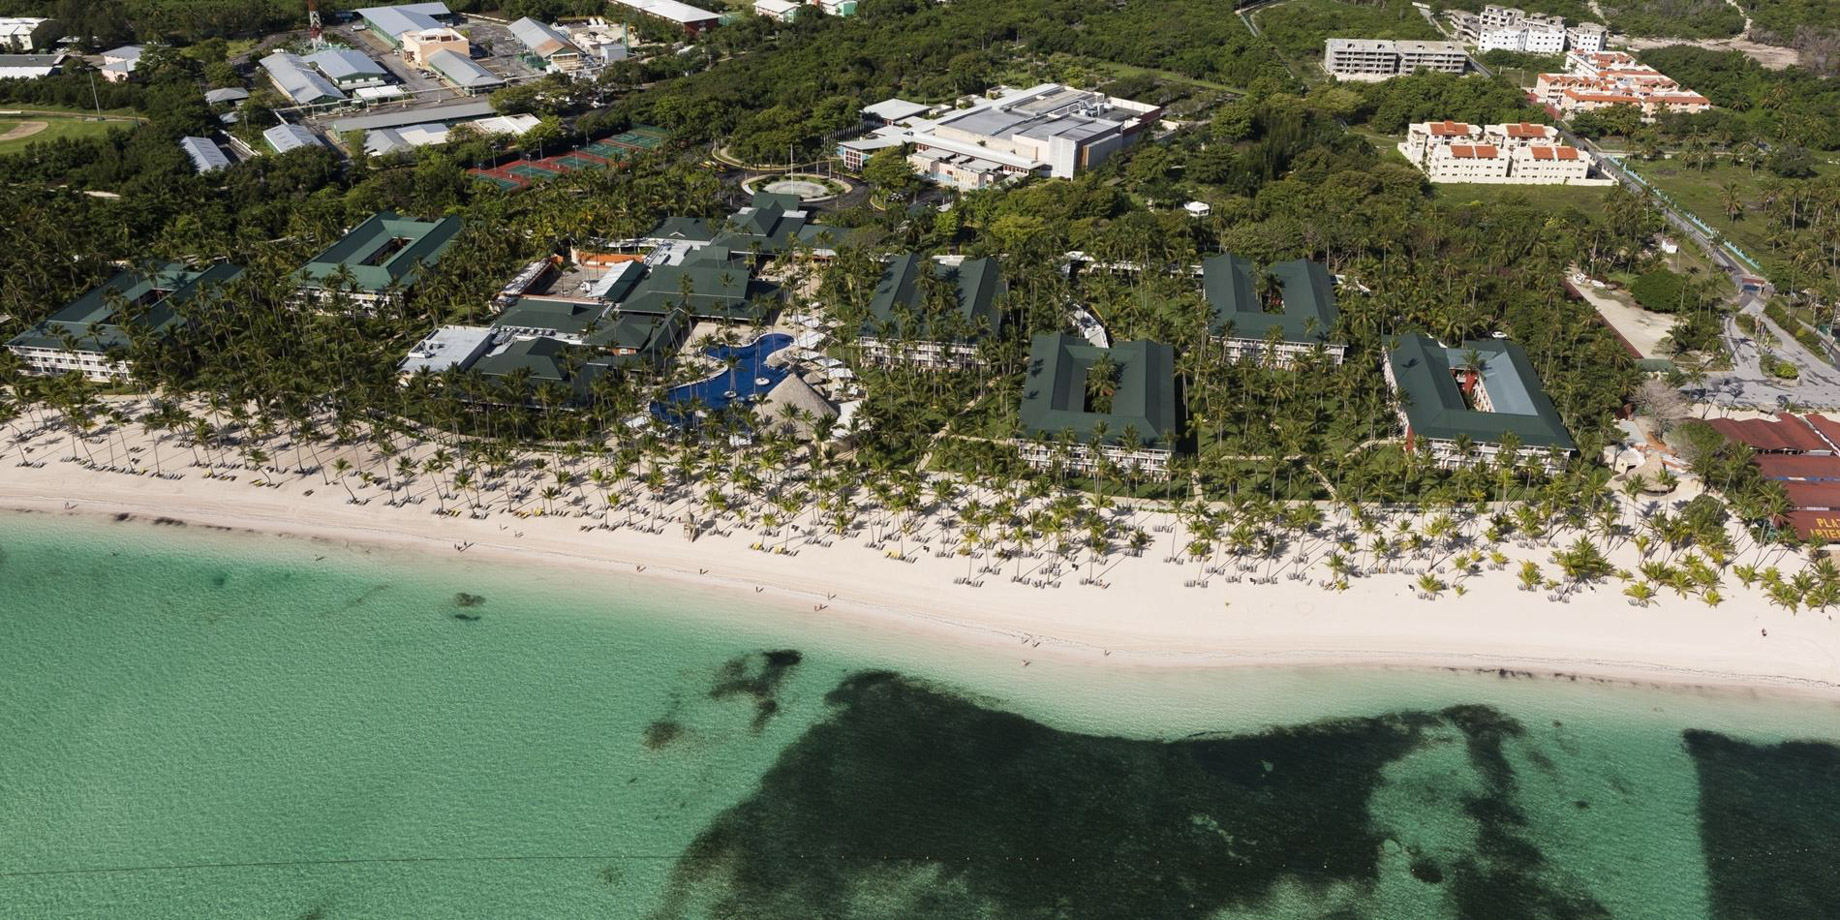 Barceló Bávaro Beach Hotel Grand Resort – Punta Cana, Dominican Republic – Aerial View